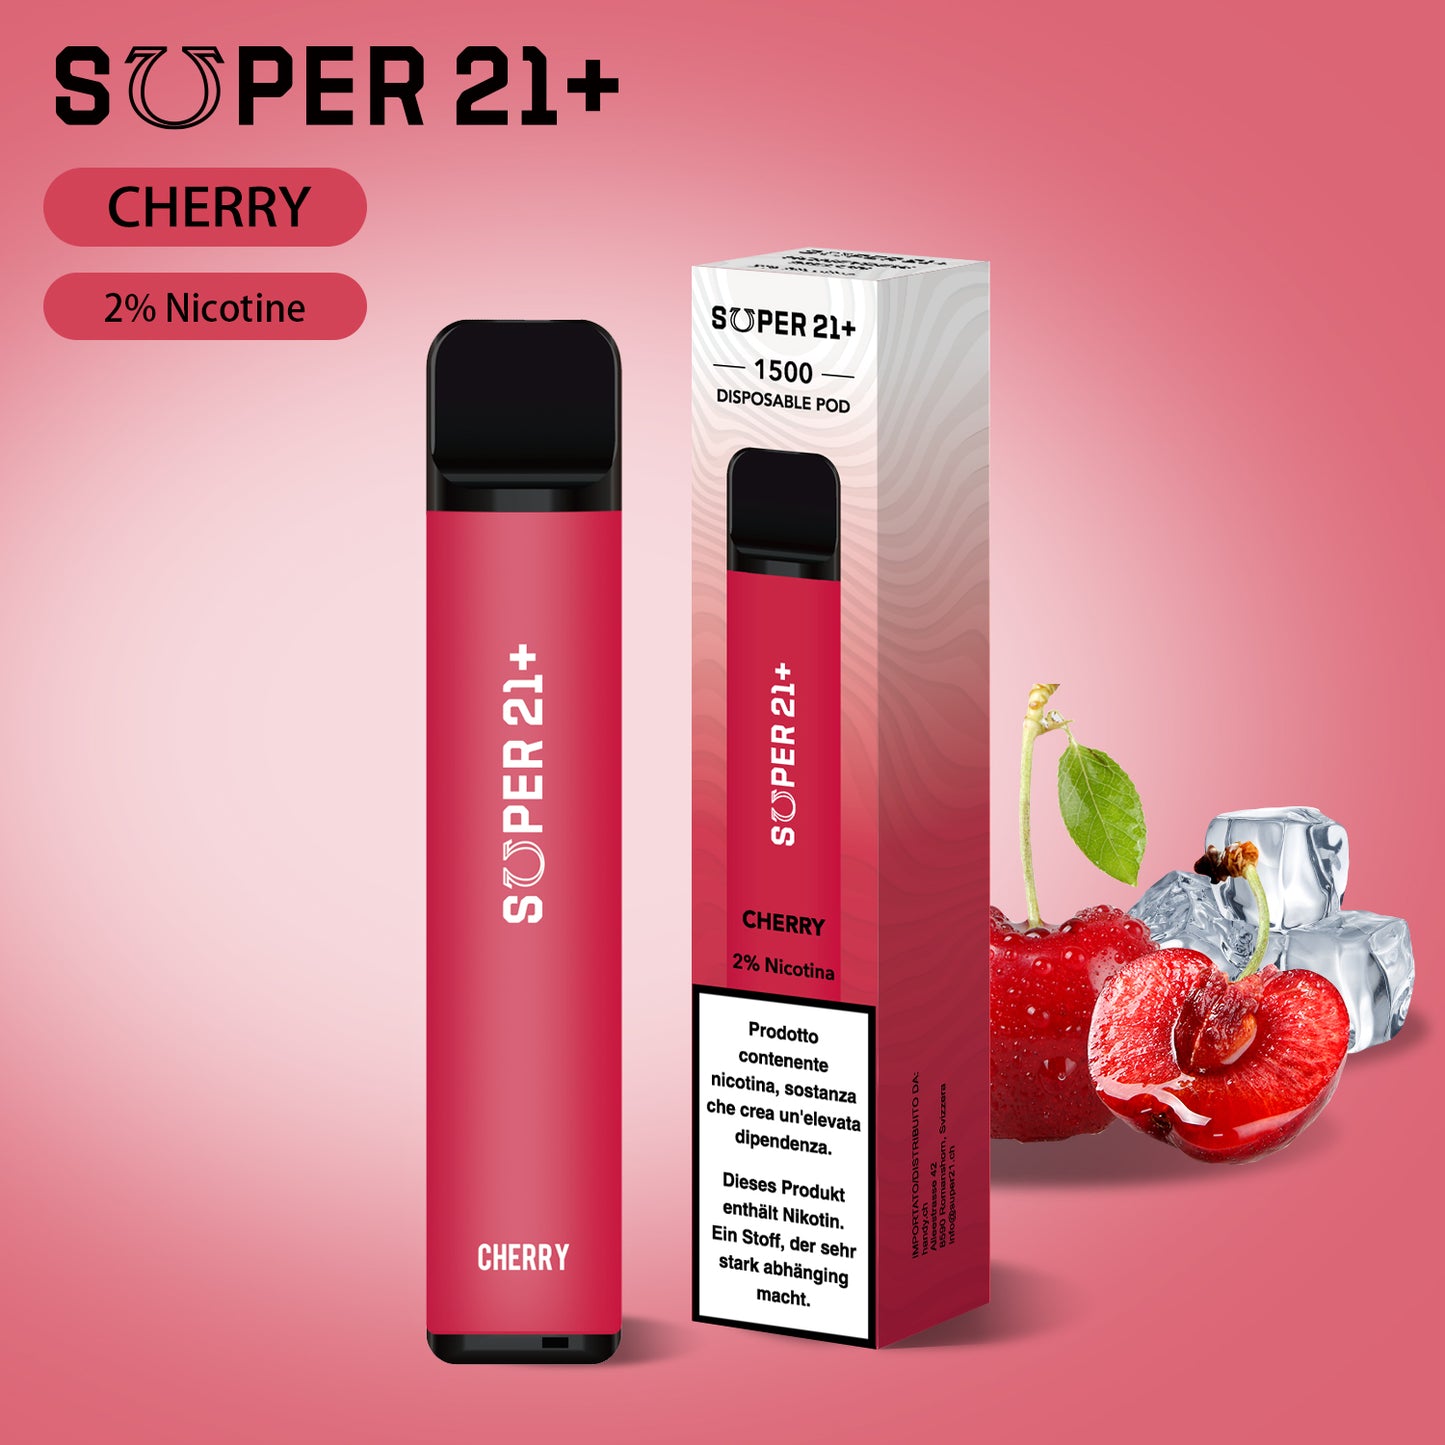 Super 21+ 1500 Cherry (2%)